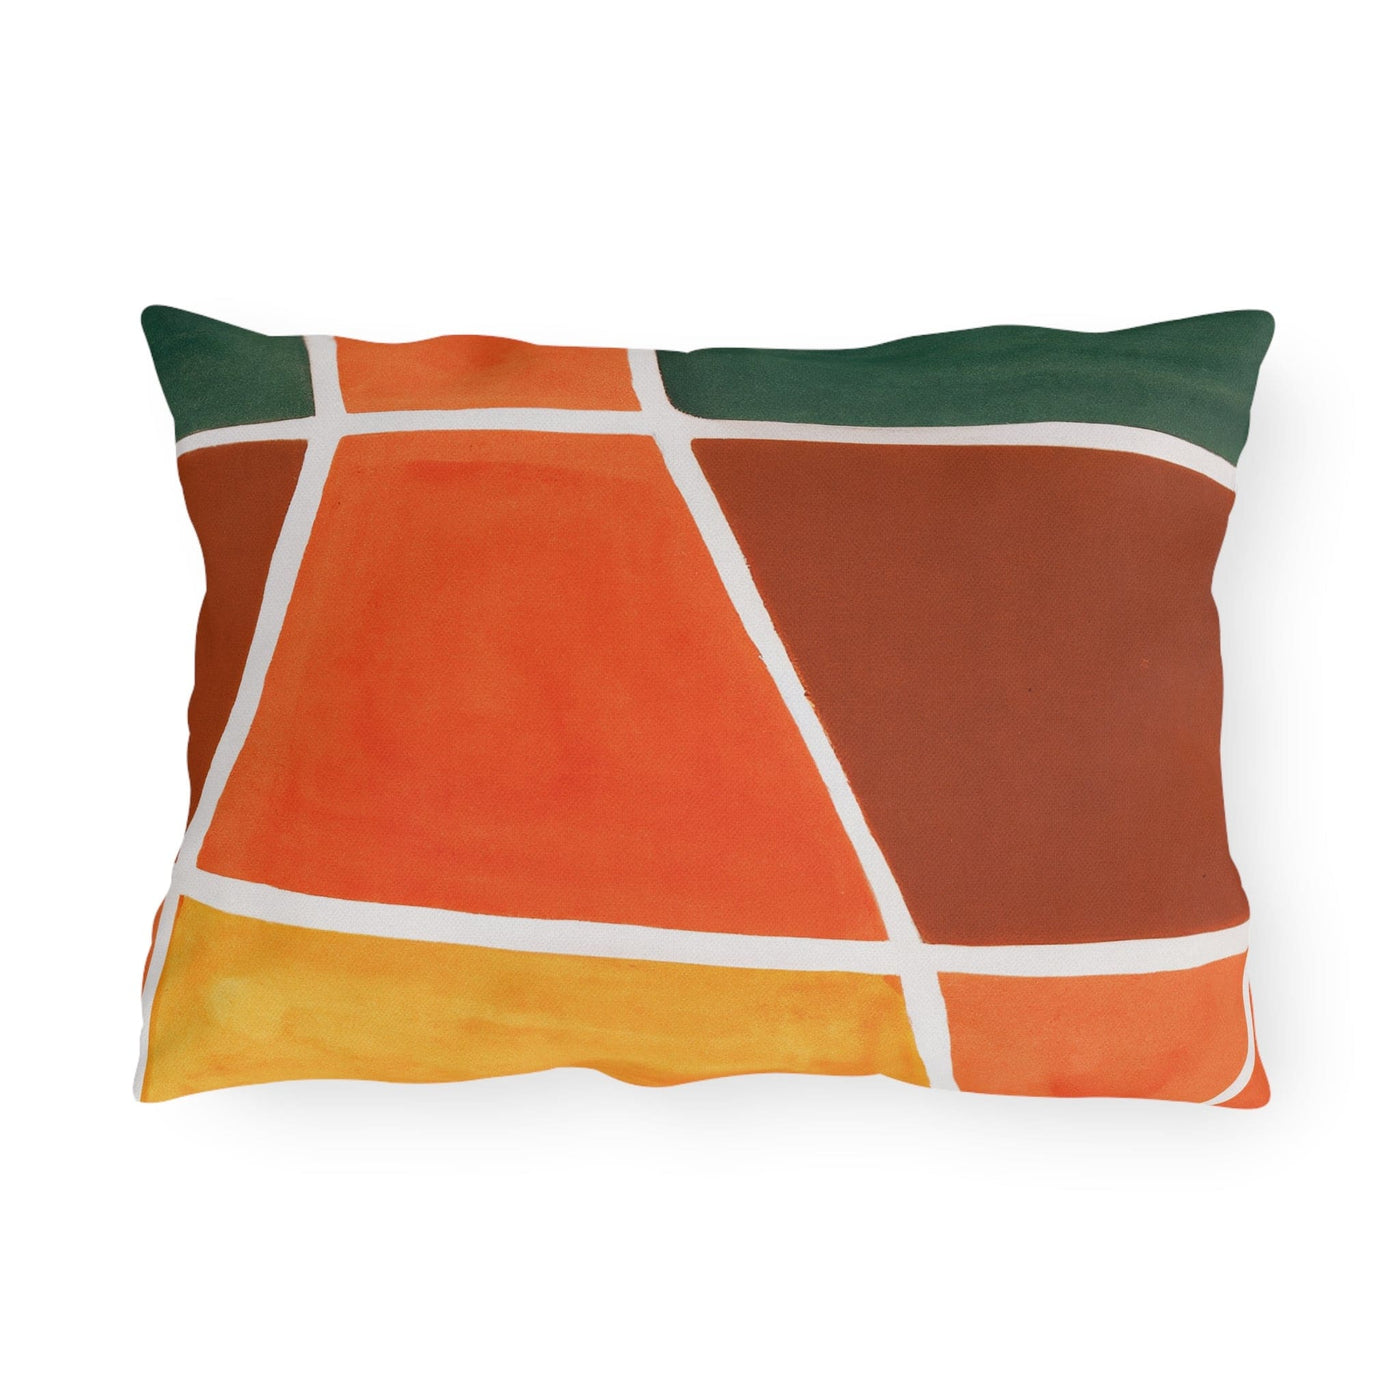 Decorative Outdoor Pillows With Zipper - Set Of 2 Orange Green Yellow Boho